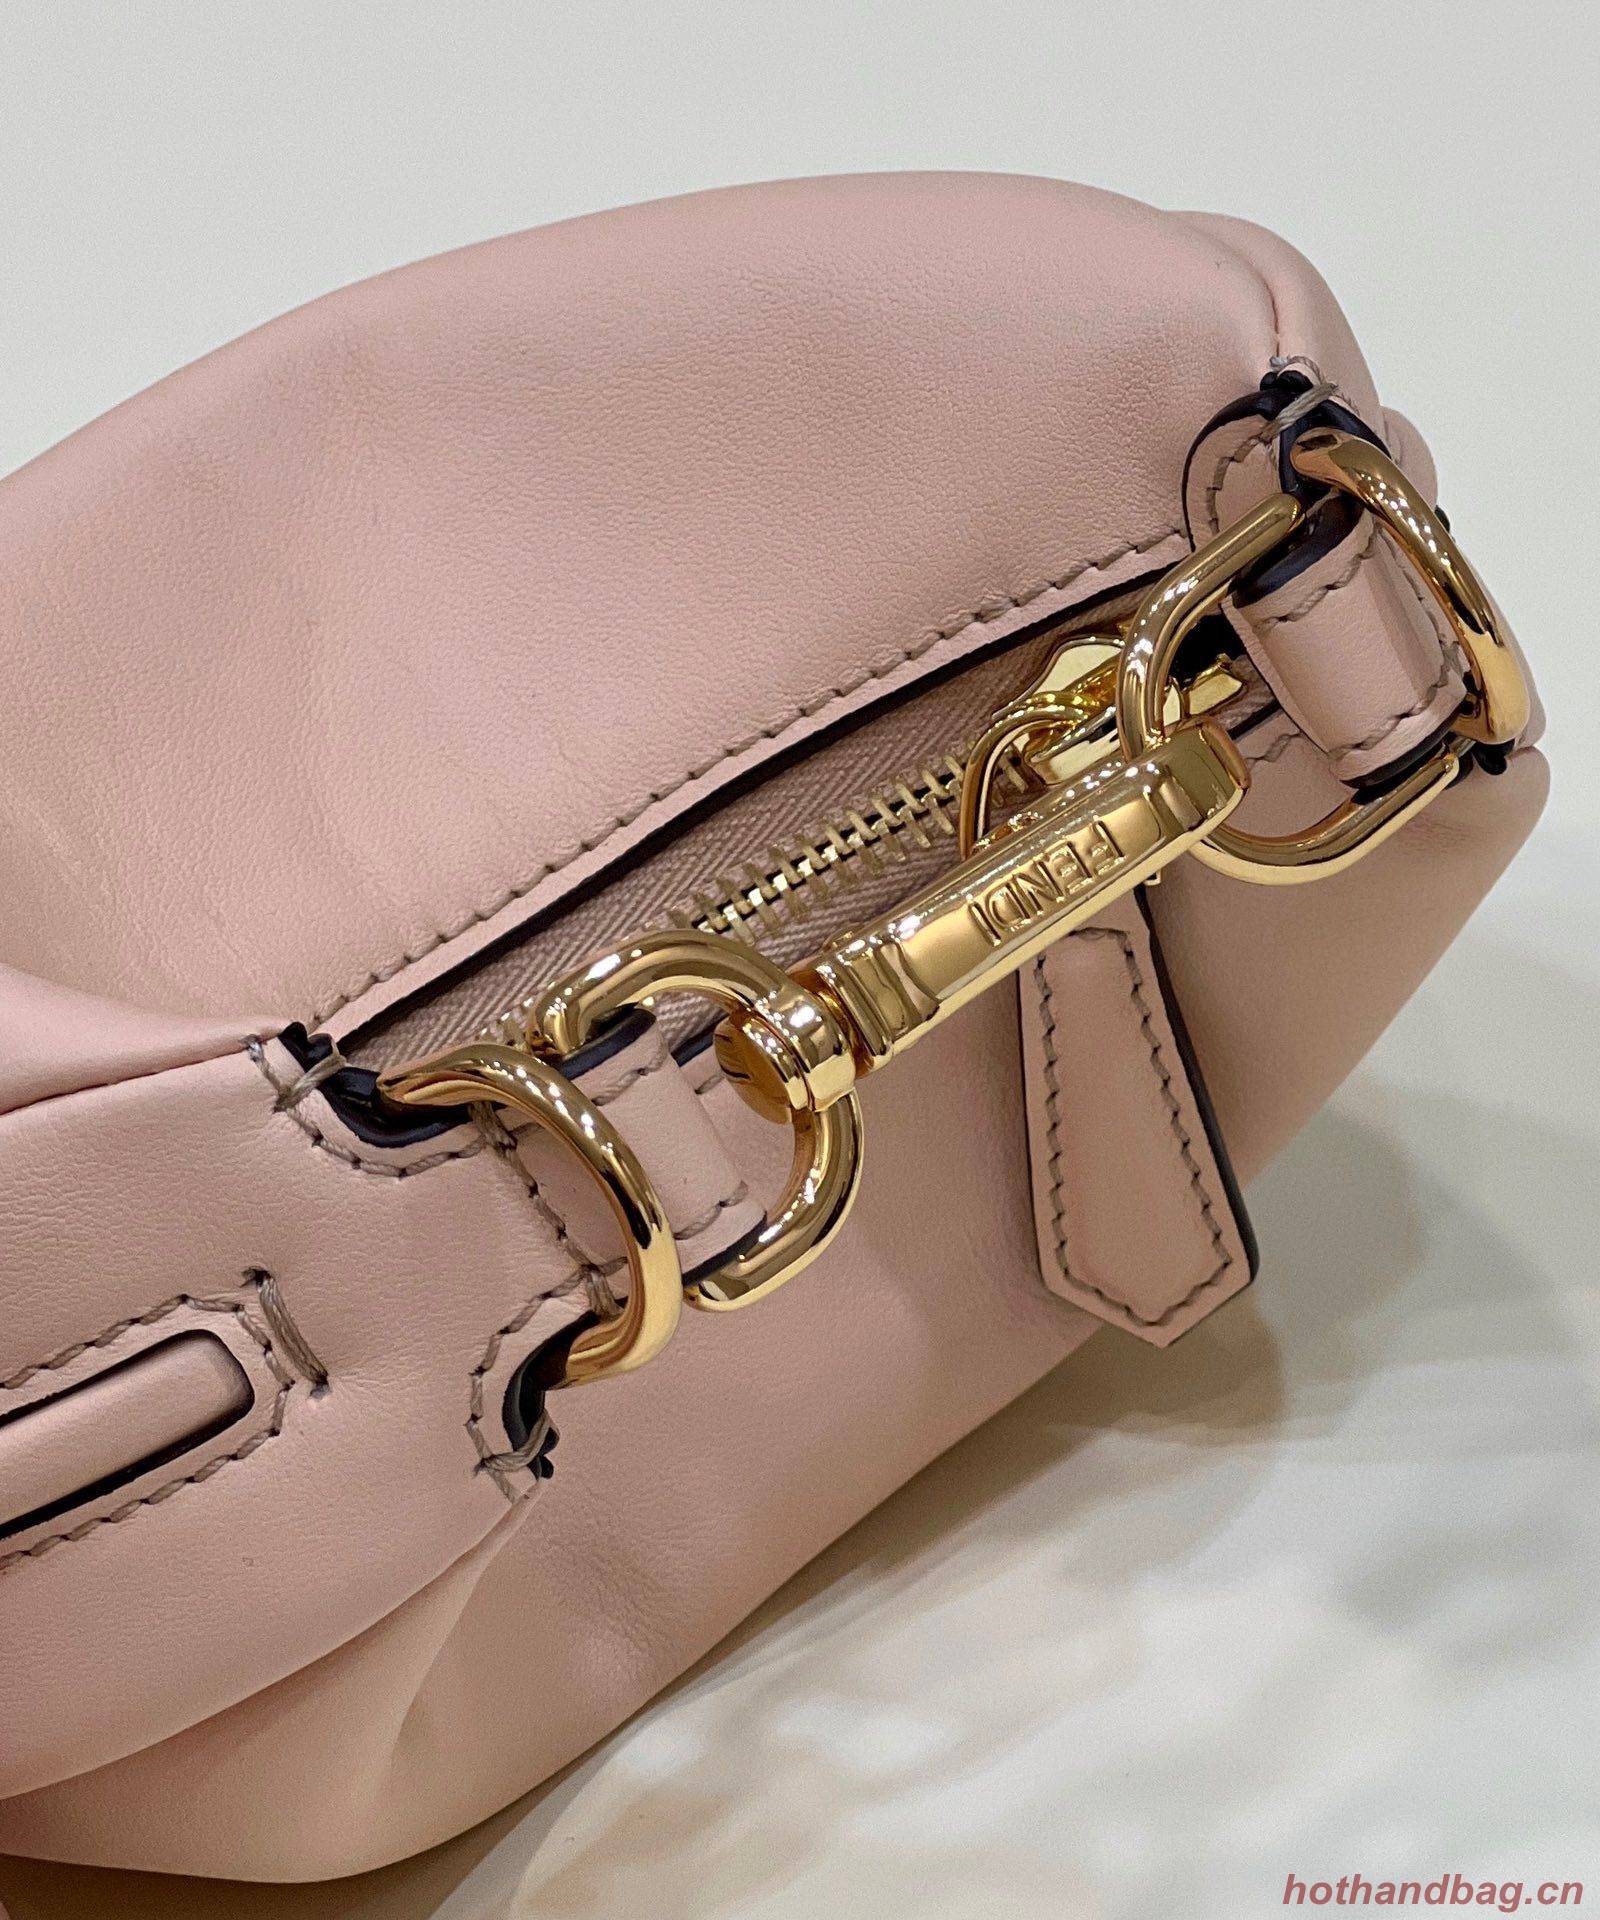 Fendi Praphy Original Leather Big Logo Bag 80056M 80056S Pink